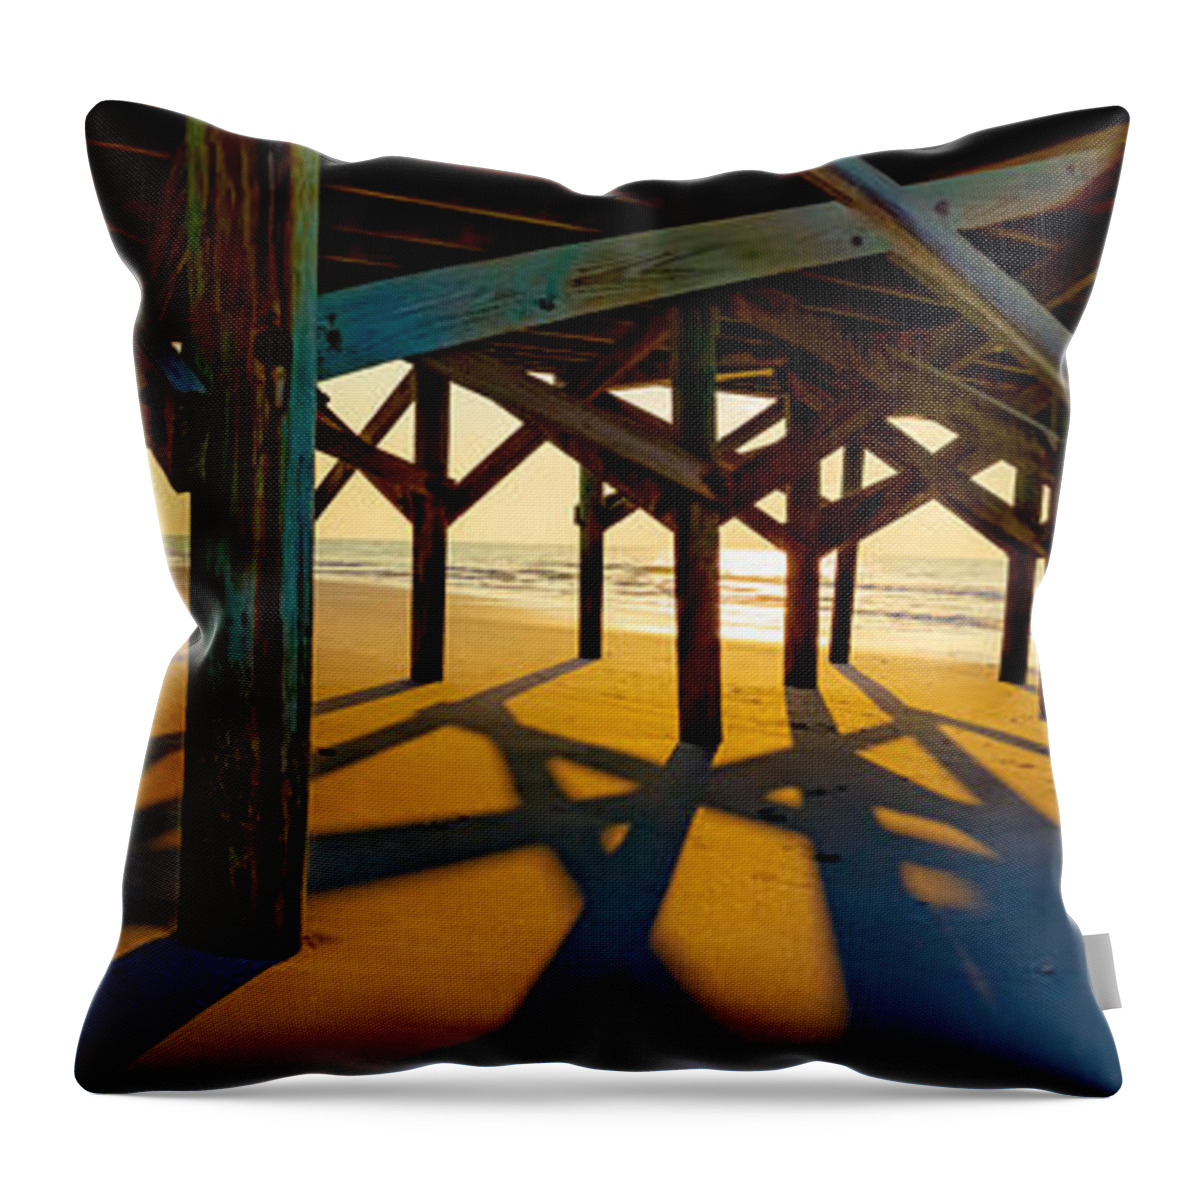 Springmaid Pier Throw Pillow featuring the photograph Springmaid Pier at Sunrise by David Smith